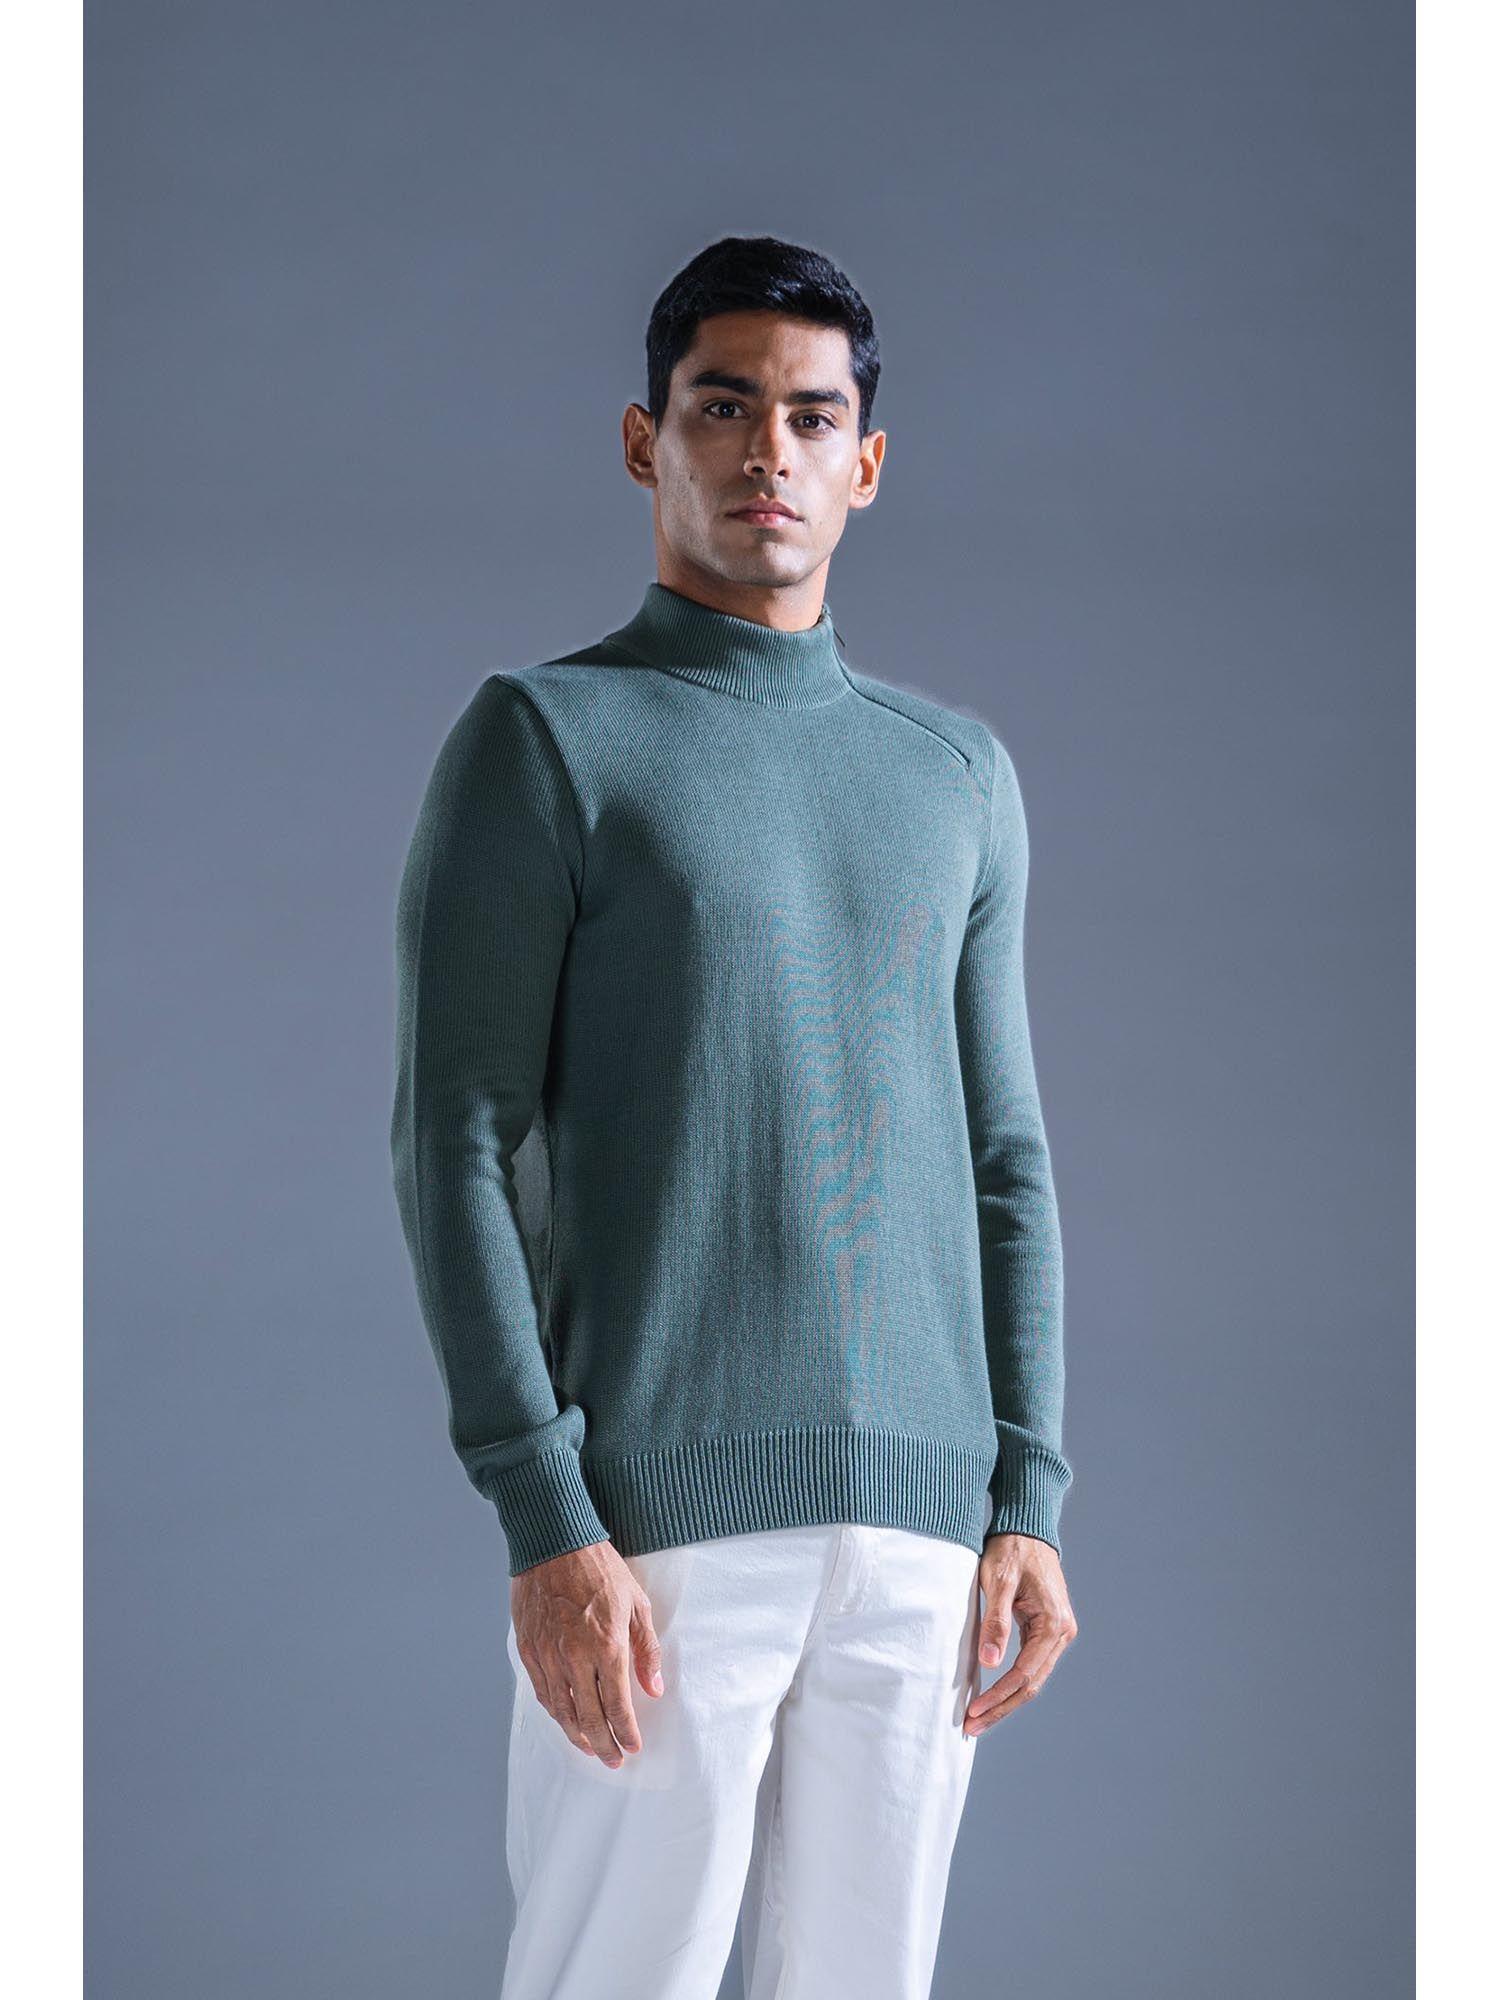 sage green cotton knit sweater